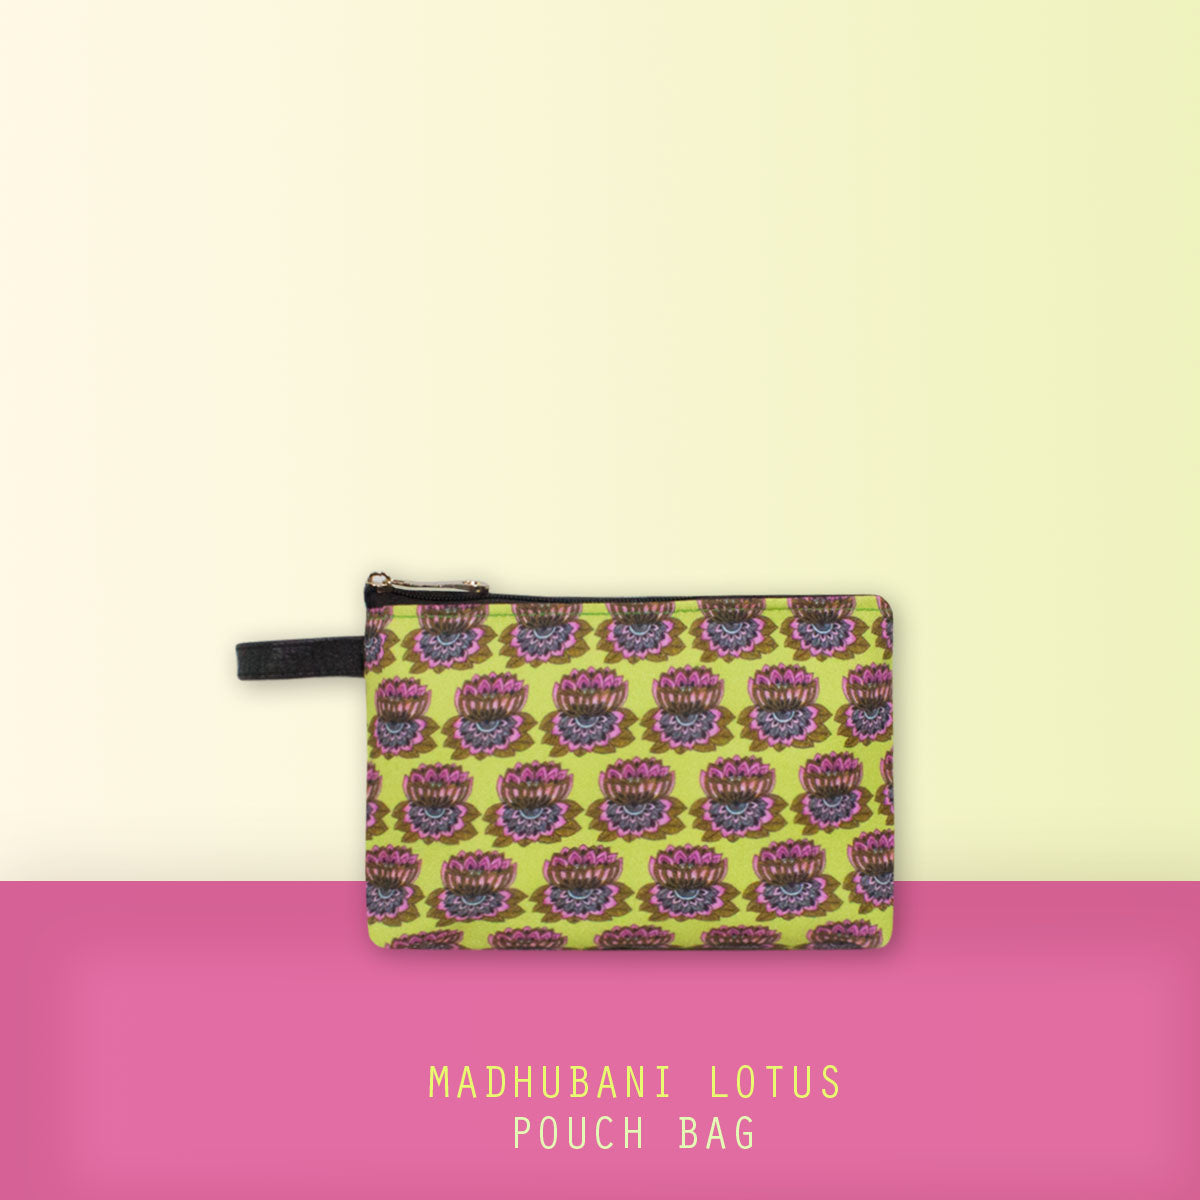 Madhubani Lotus Pouch